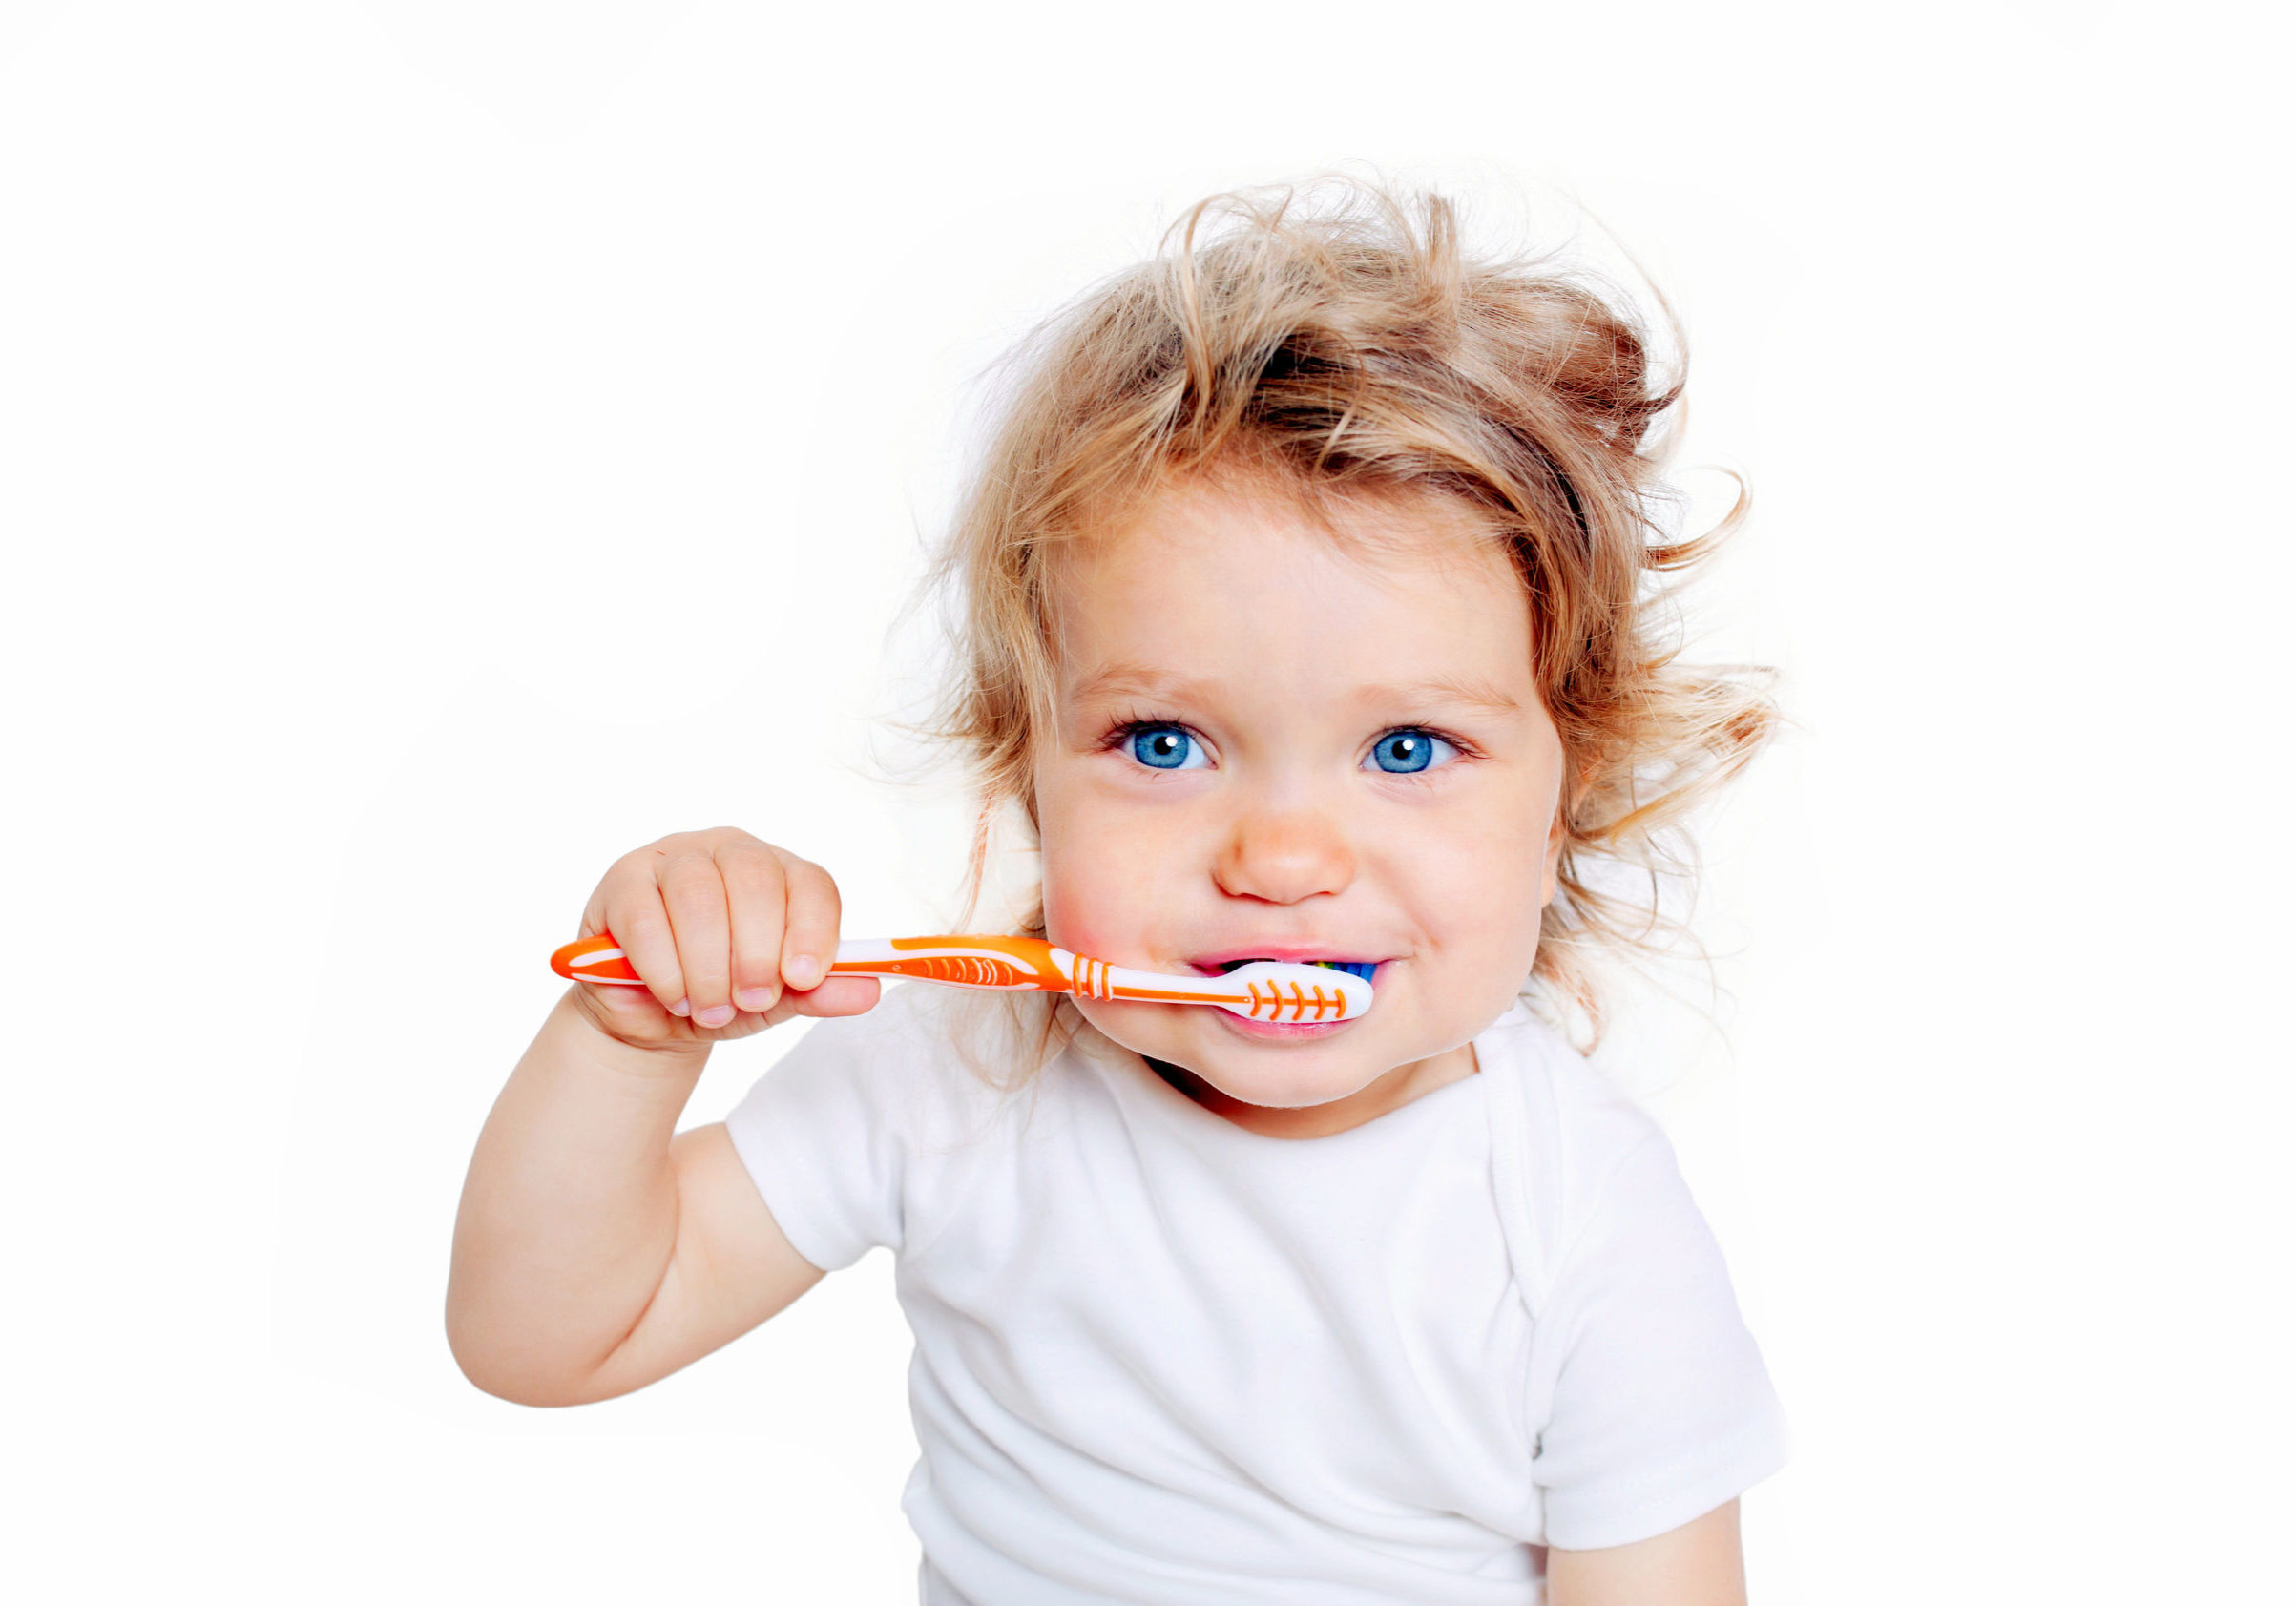 Curly baby toddler brushing teeth. Isolated on white background.